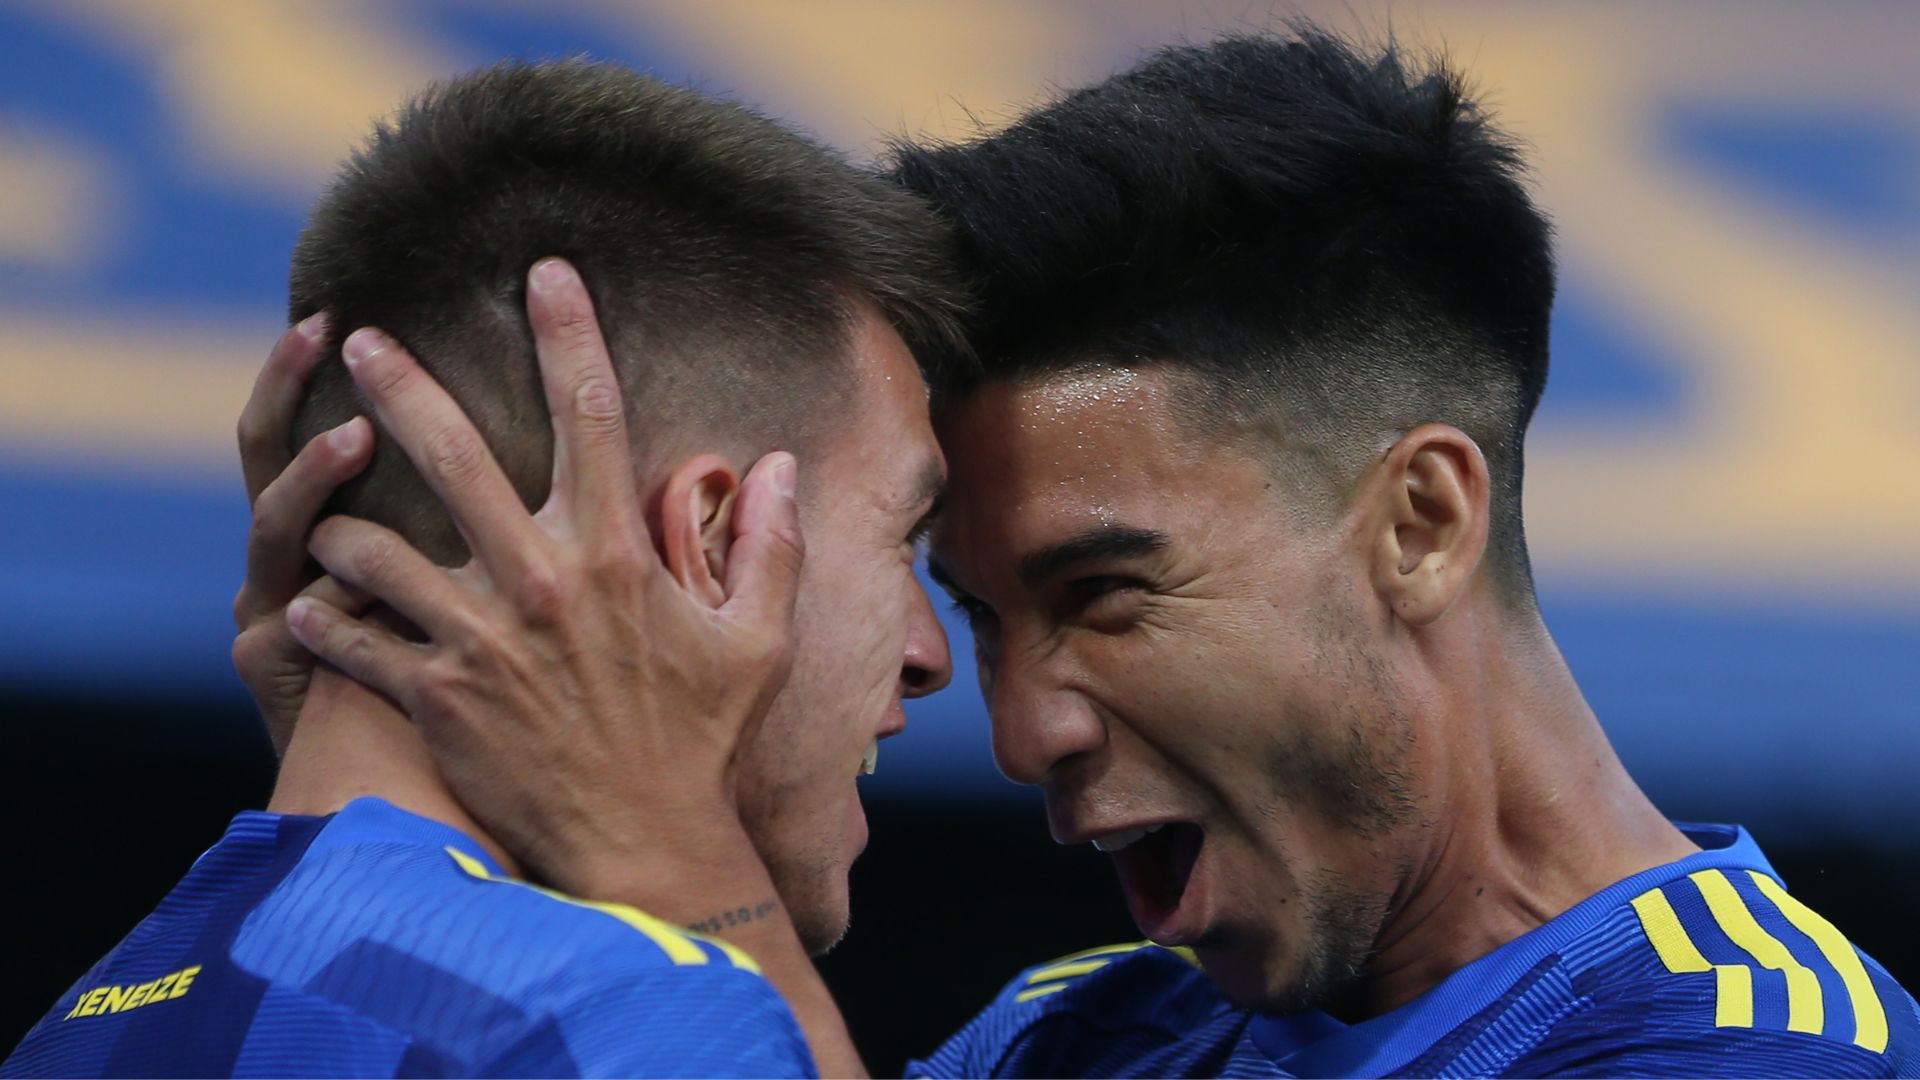 Pol Fernández celebrating a goal for Boca Juniors (Credit: Getty Images)